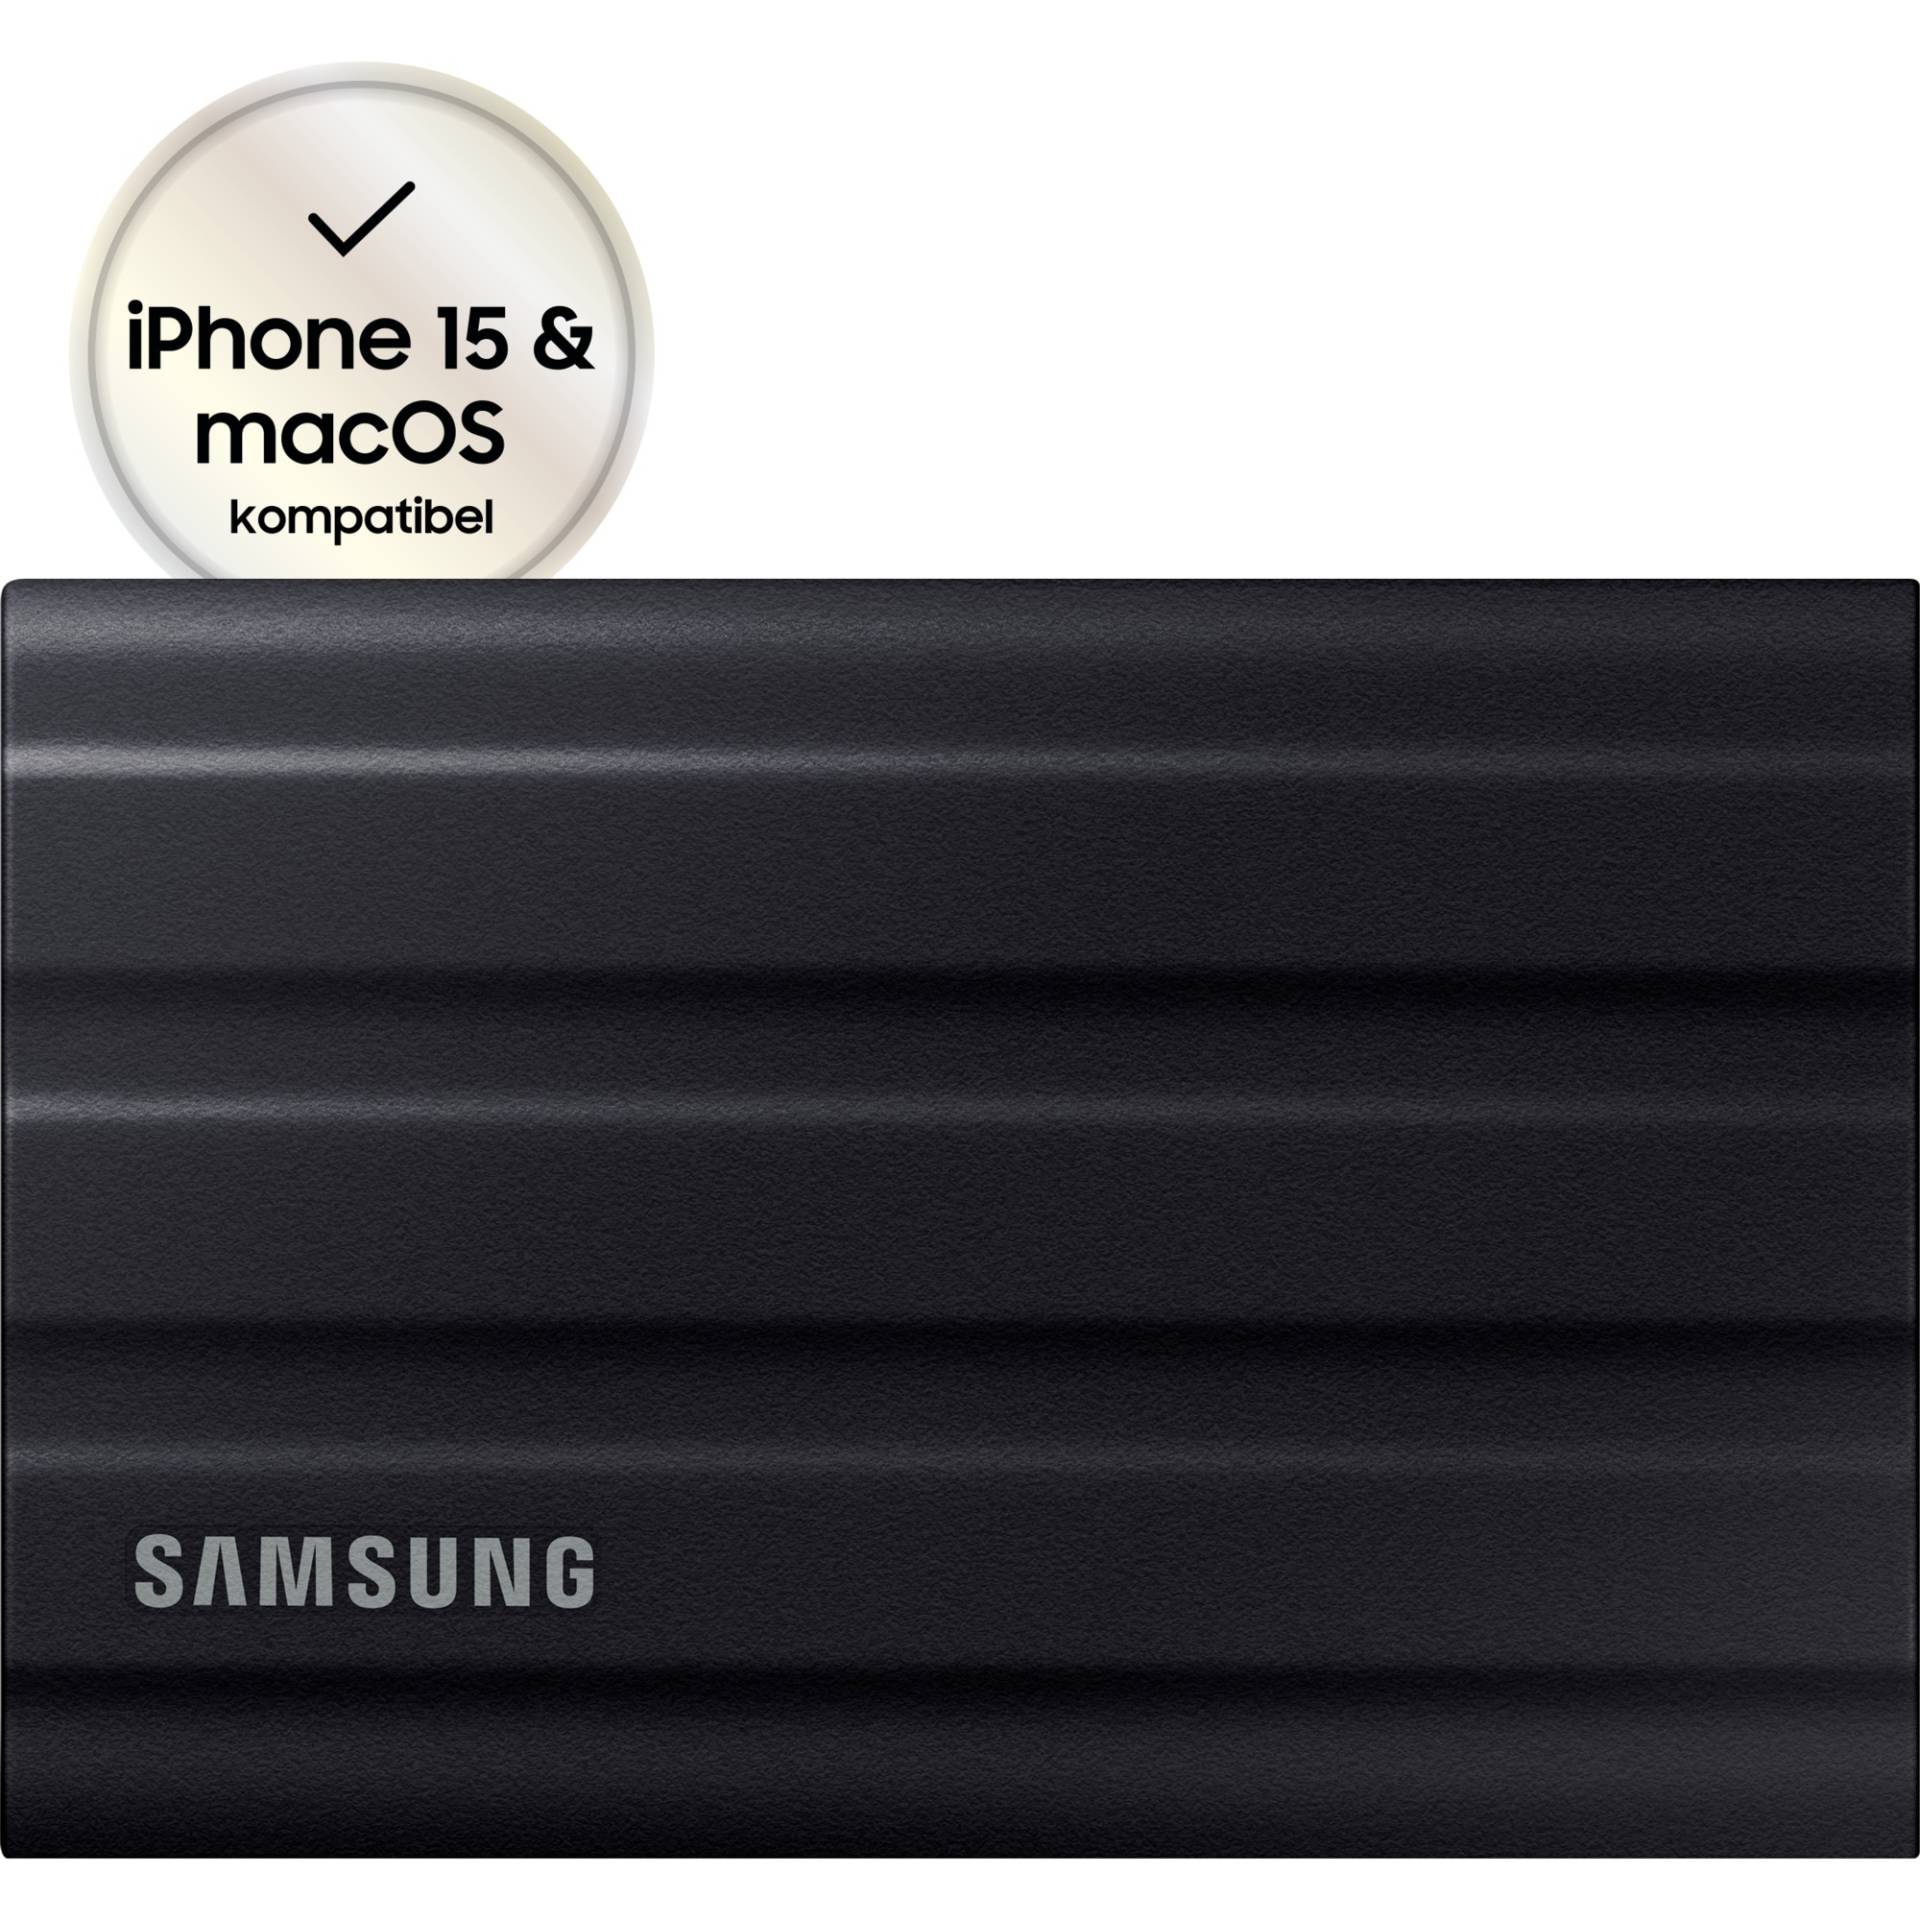 Portable SSD T7 Shield 4 TB, Externe SSD von Samsung